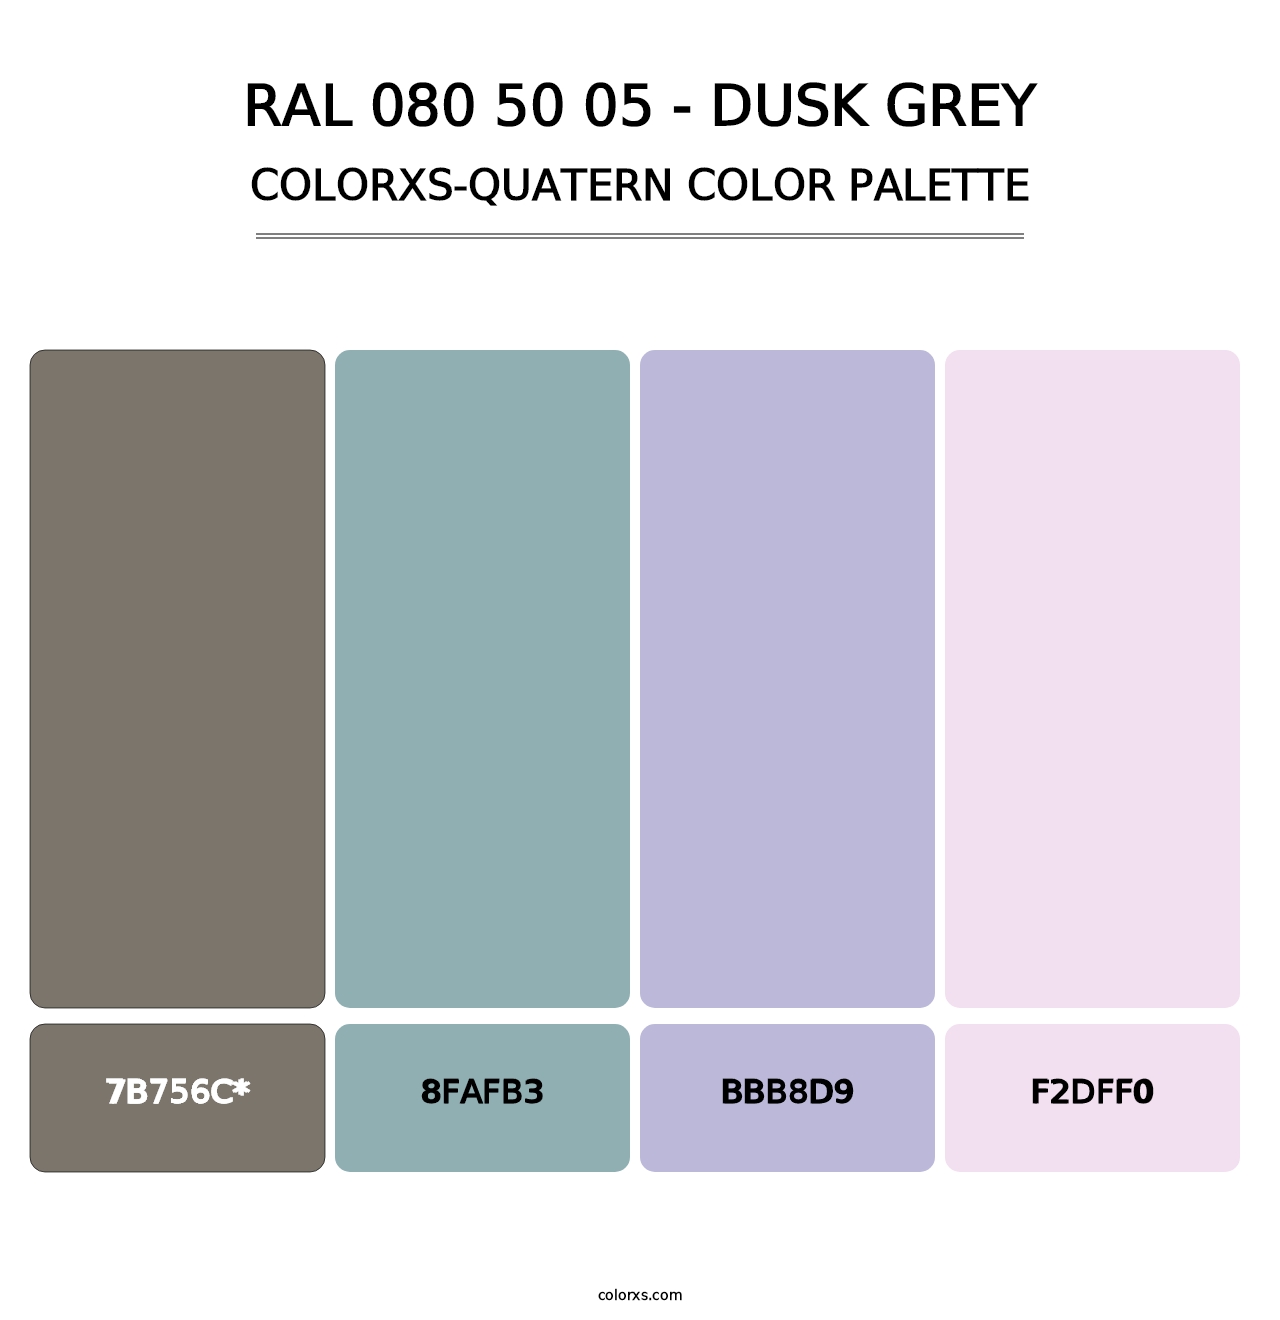 RAL 080 50 05 - Dusk Grey - Colorxs Quatern Palette